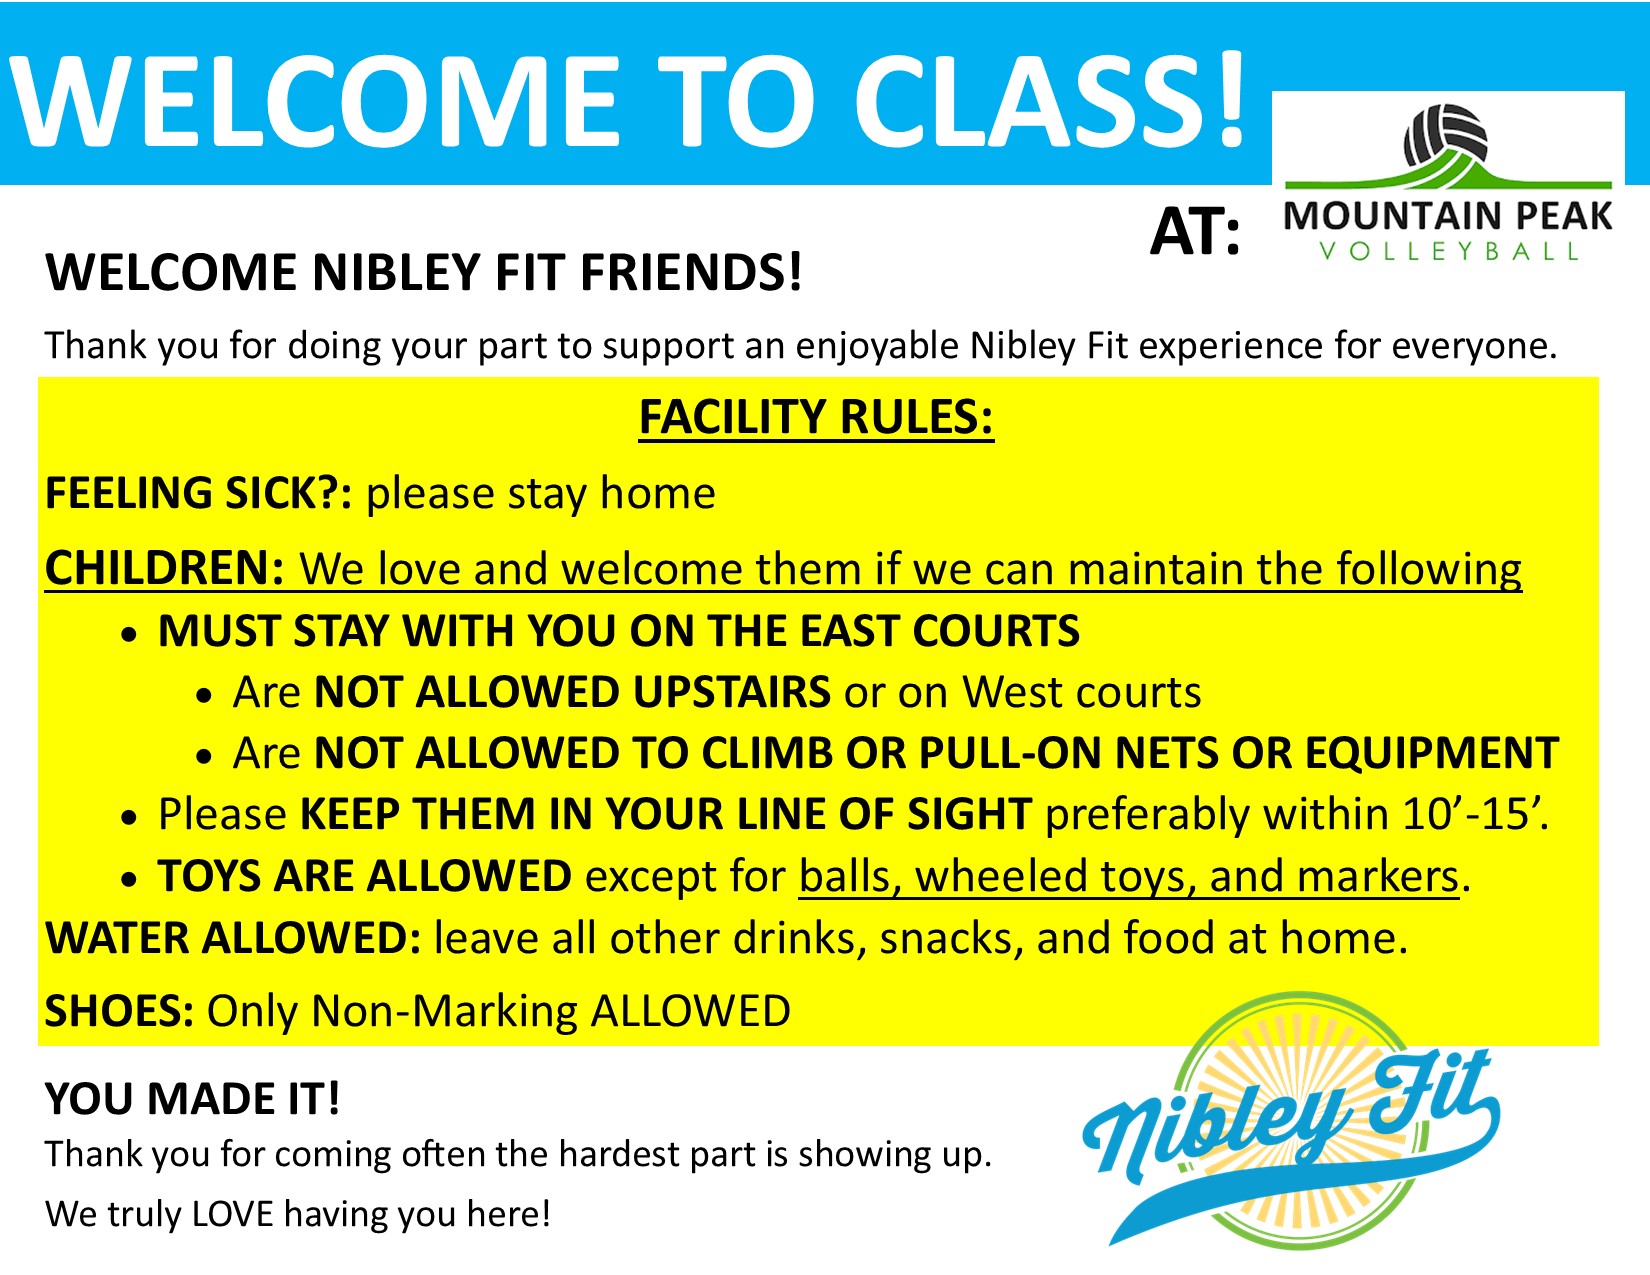 Nibley Fit Mt Peak Rules